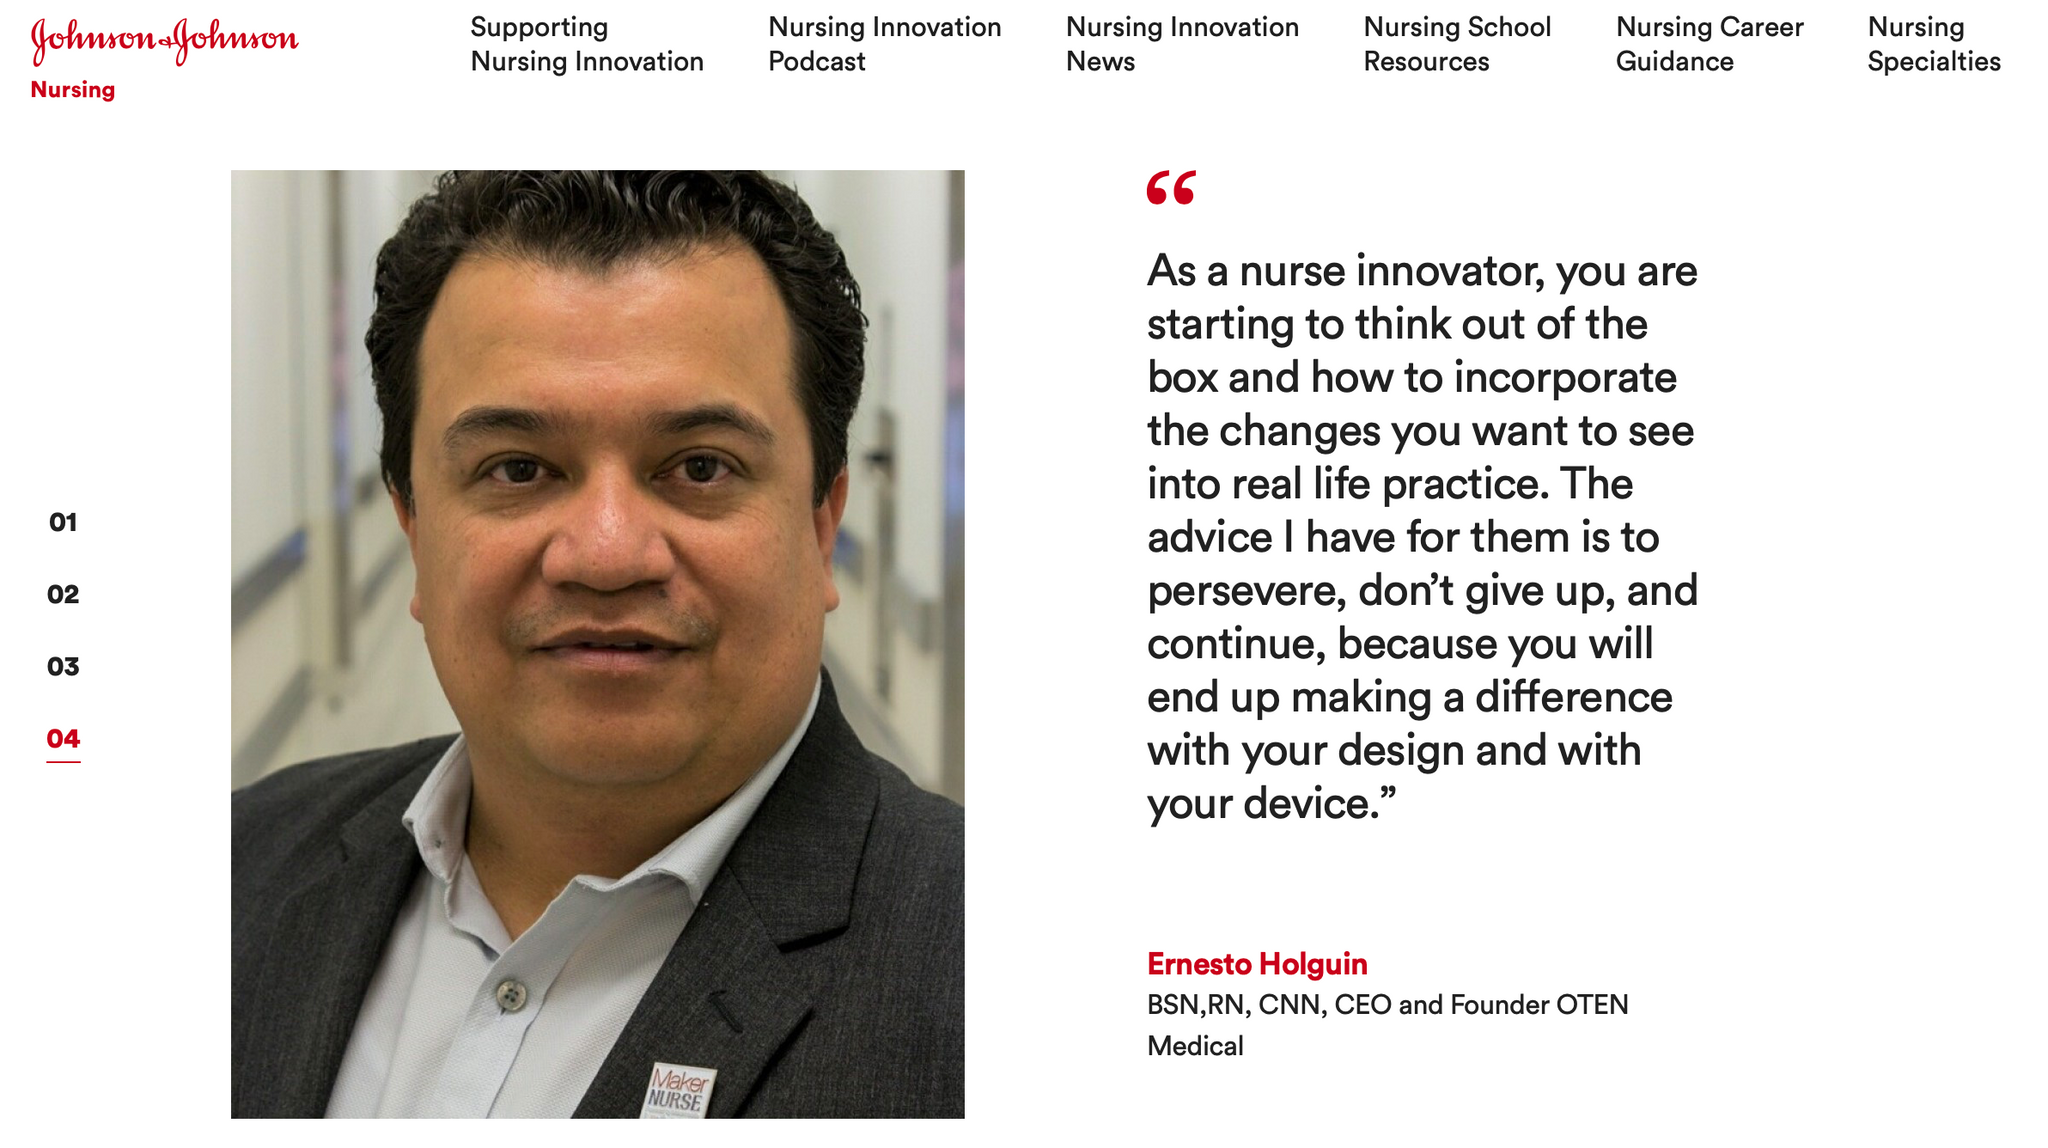 OTEN Medical founder Ernesto Holguin is profiled as a nurse innovator by Johnson & Johnson Nursing